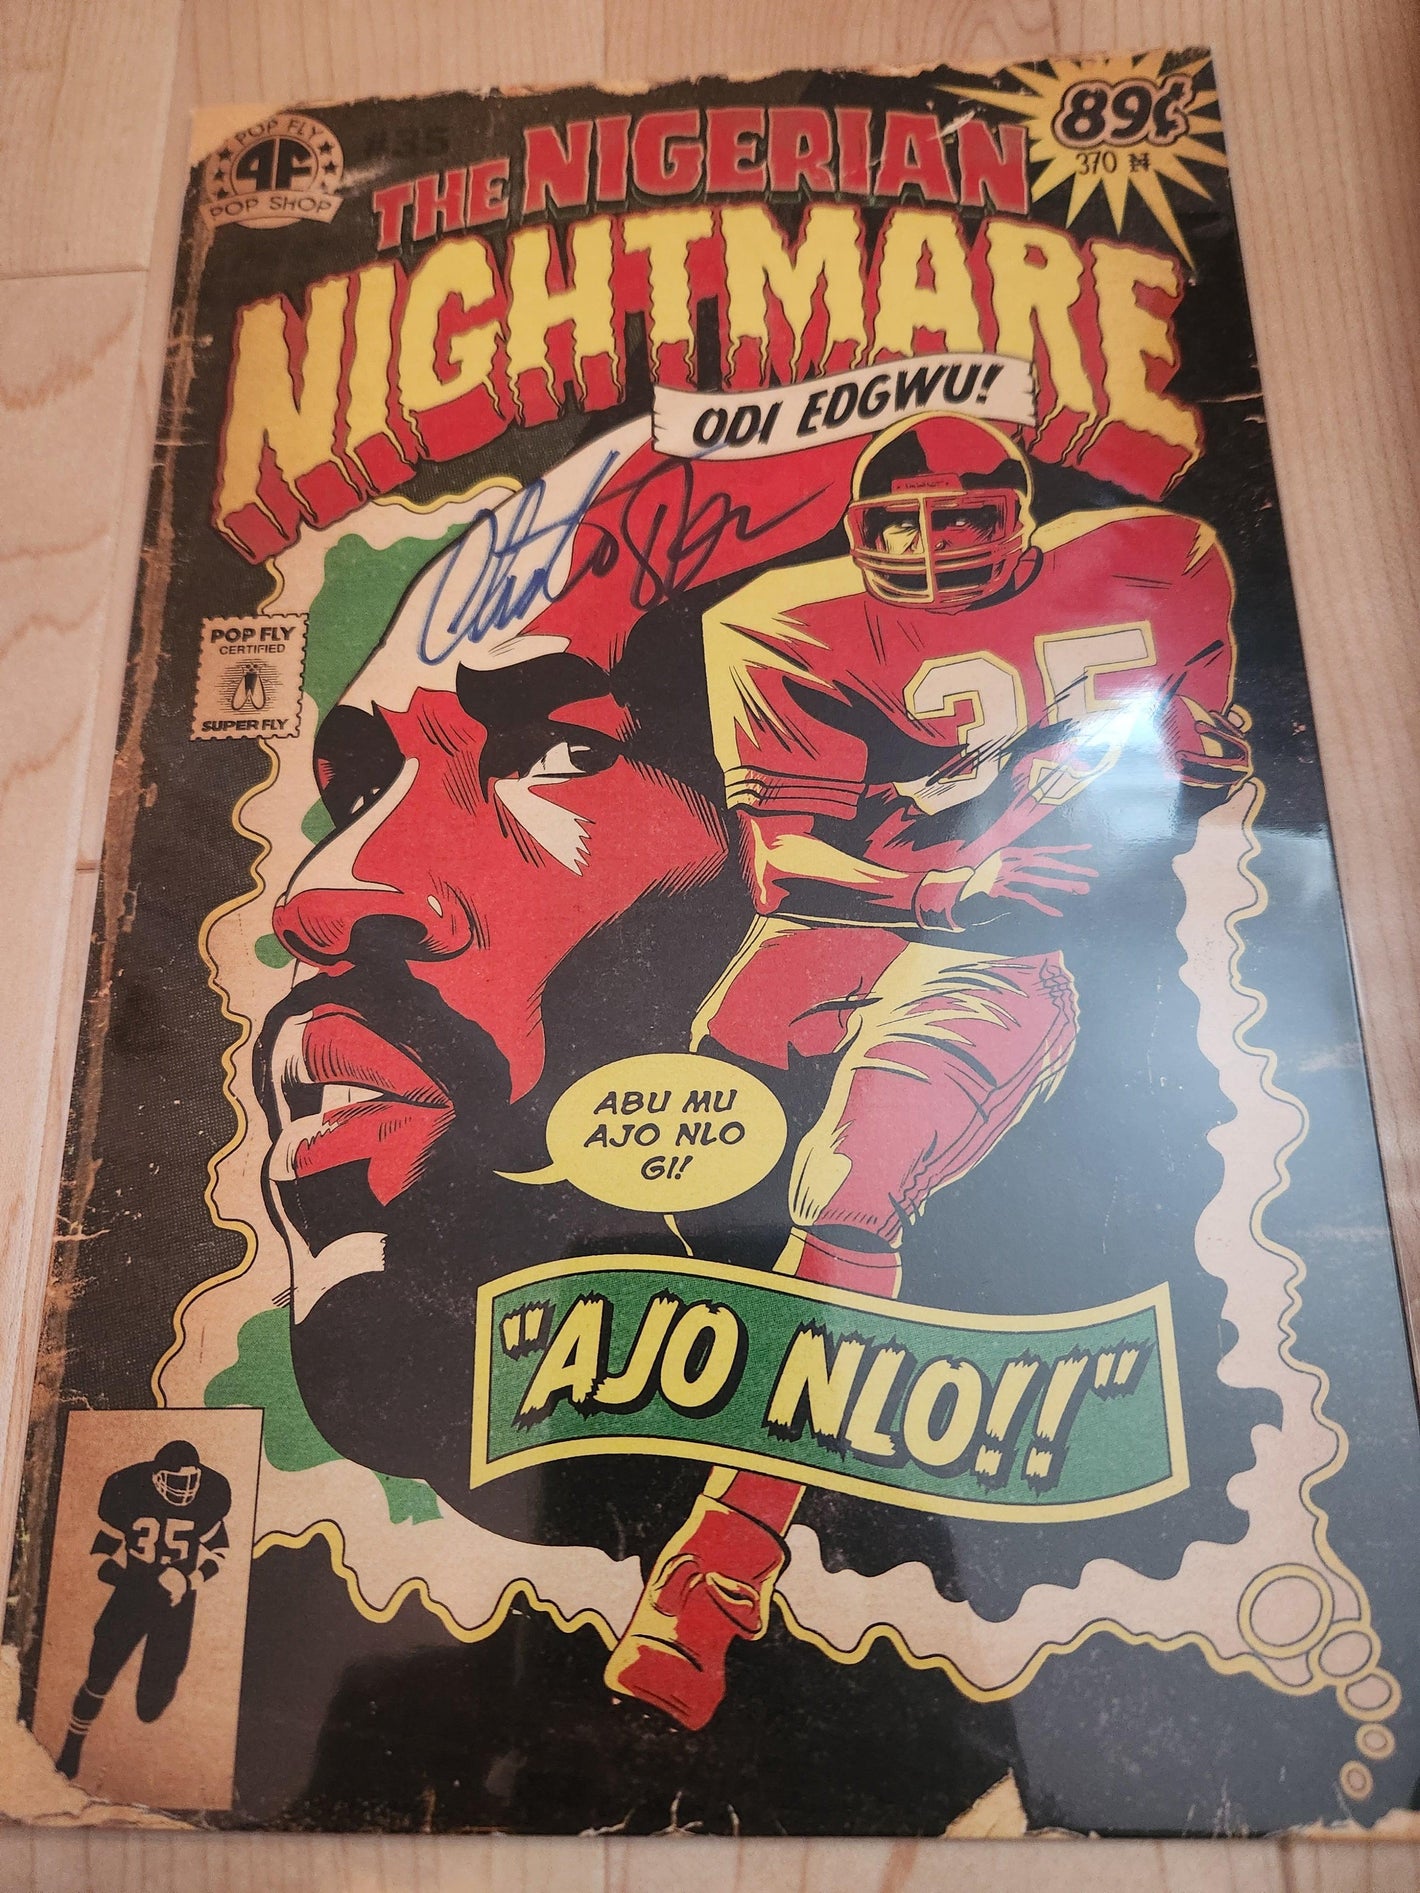 Christian Okoye "The Nigerian Nightmare" Pop Fly Pop Shop Print #5 – Signed by Christian Okoye & Daniel Jacob Horine - PastPros